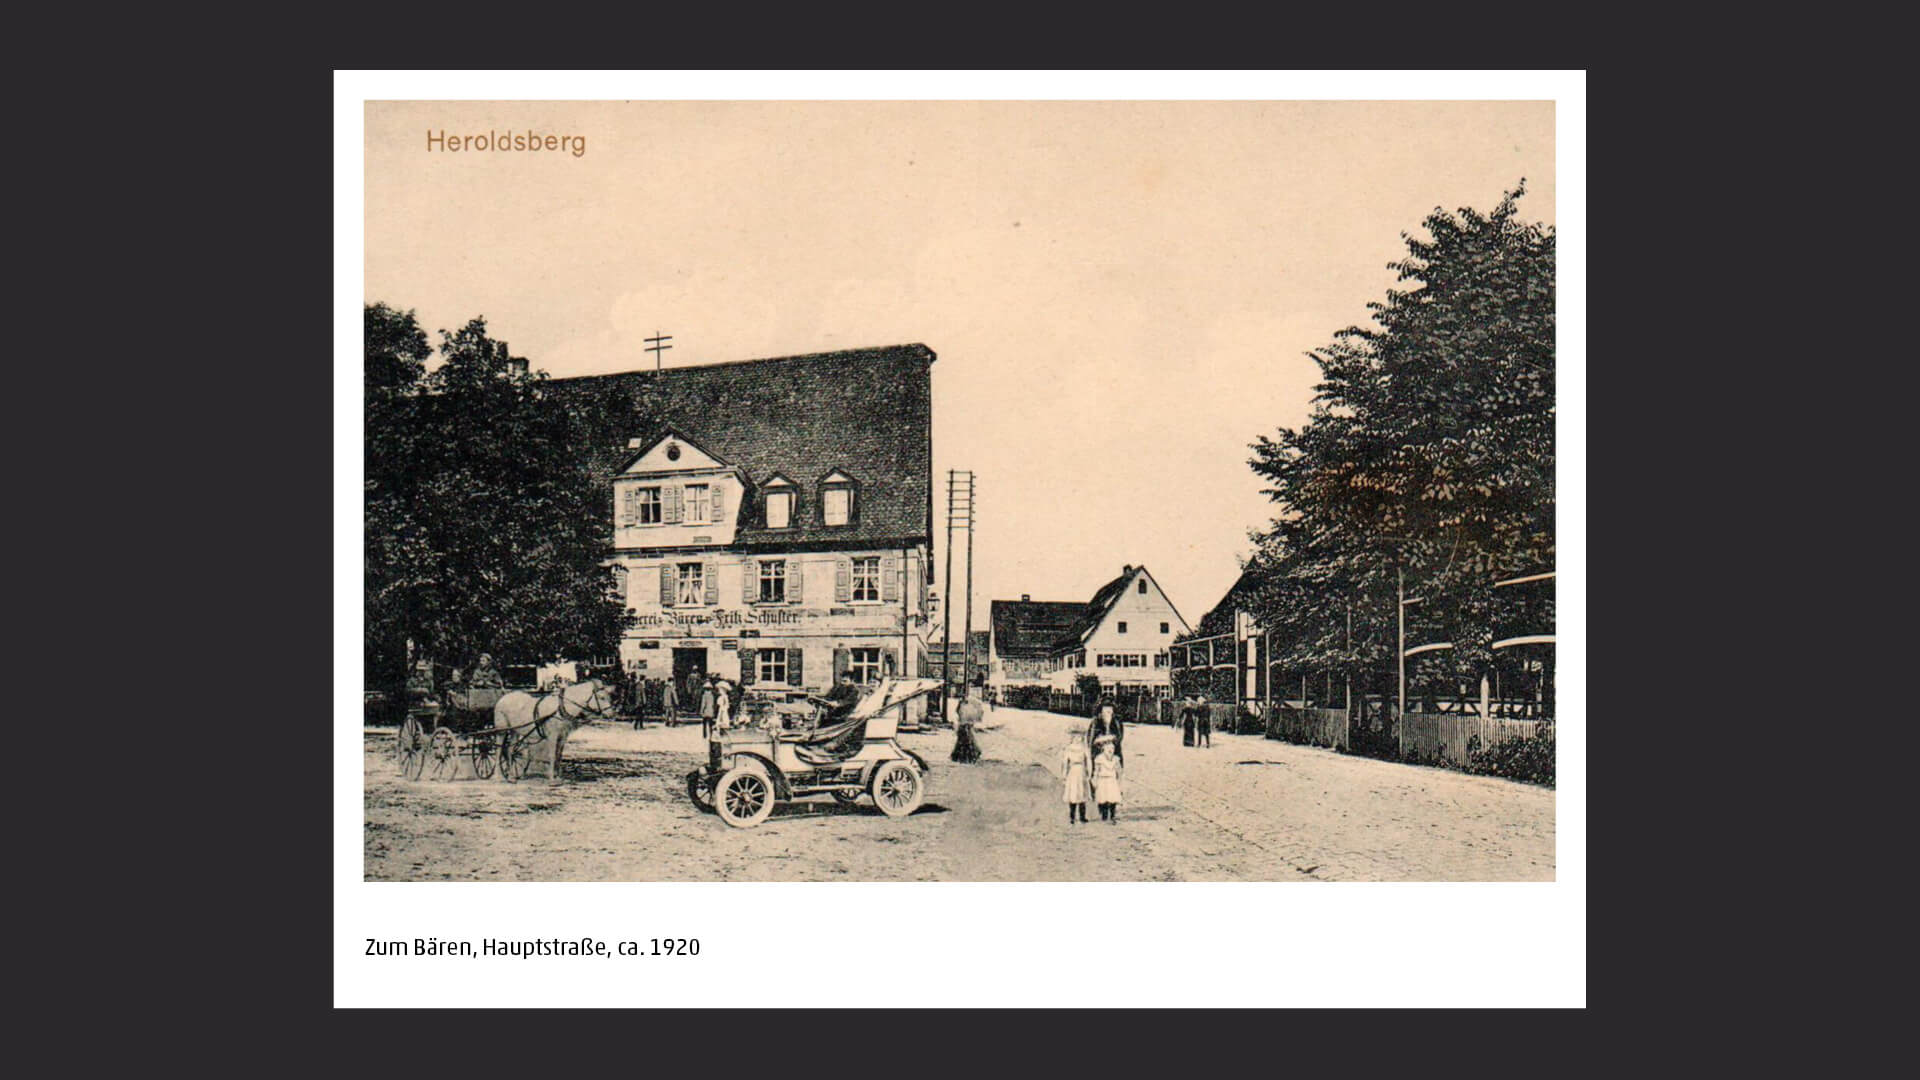 Gasthof zum Bären, Hauptstraße, Heroldsberg, um 1920